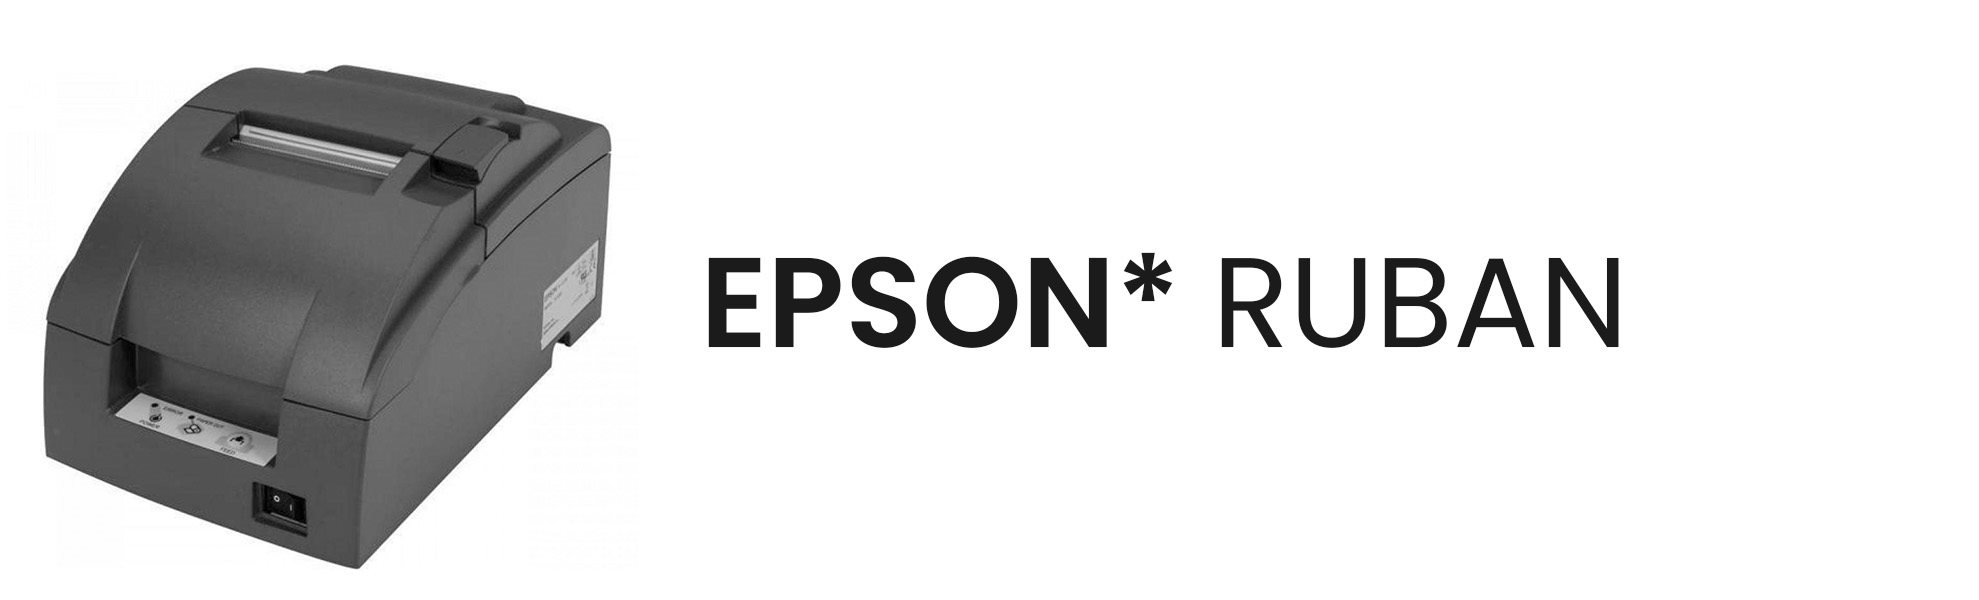 Epson_ ruban